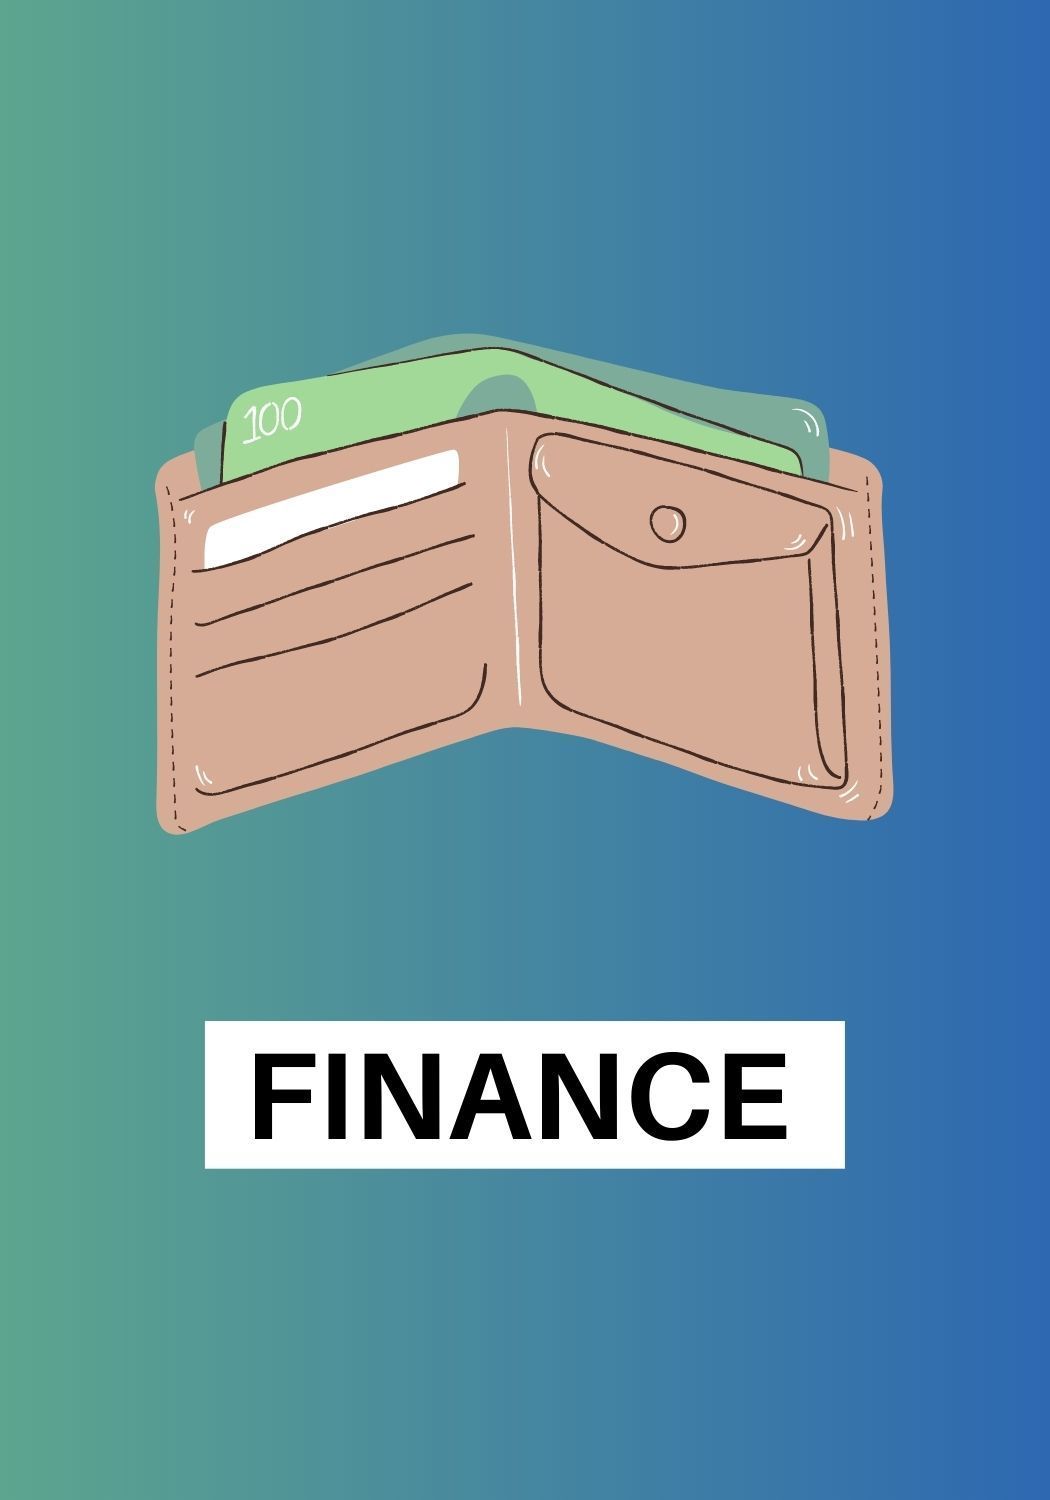 Wallet with Finance below